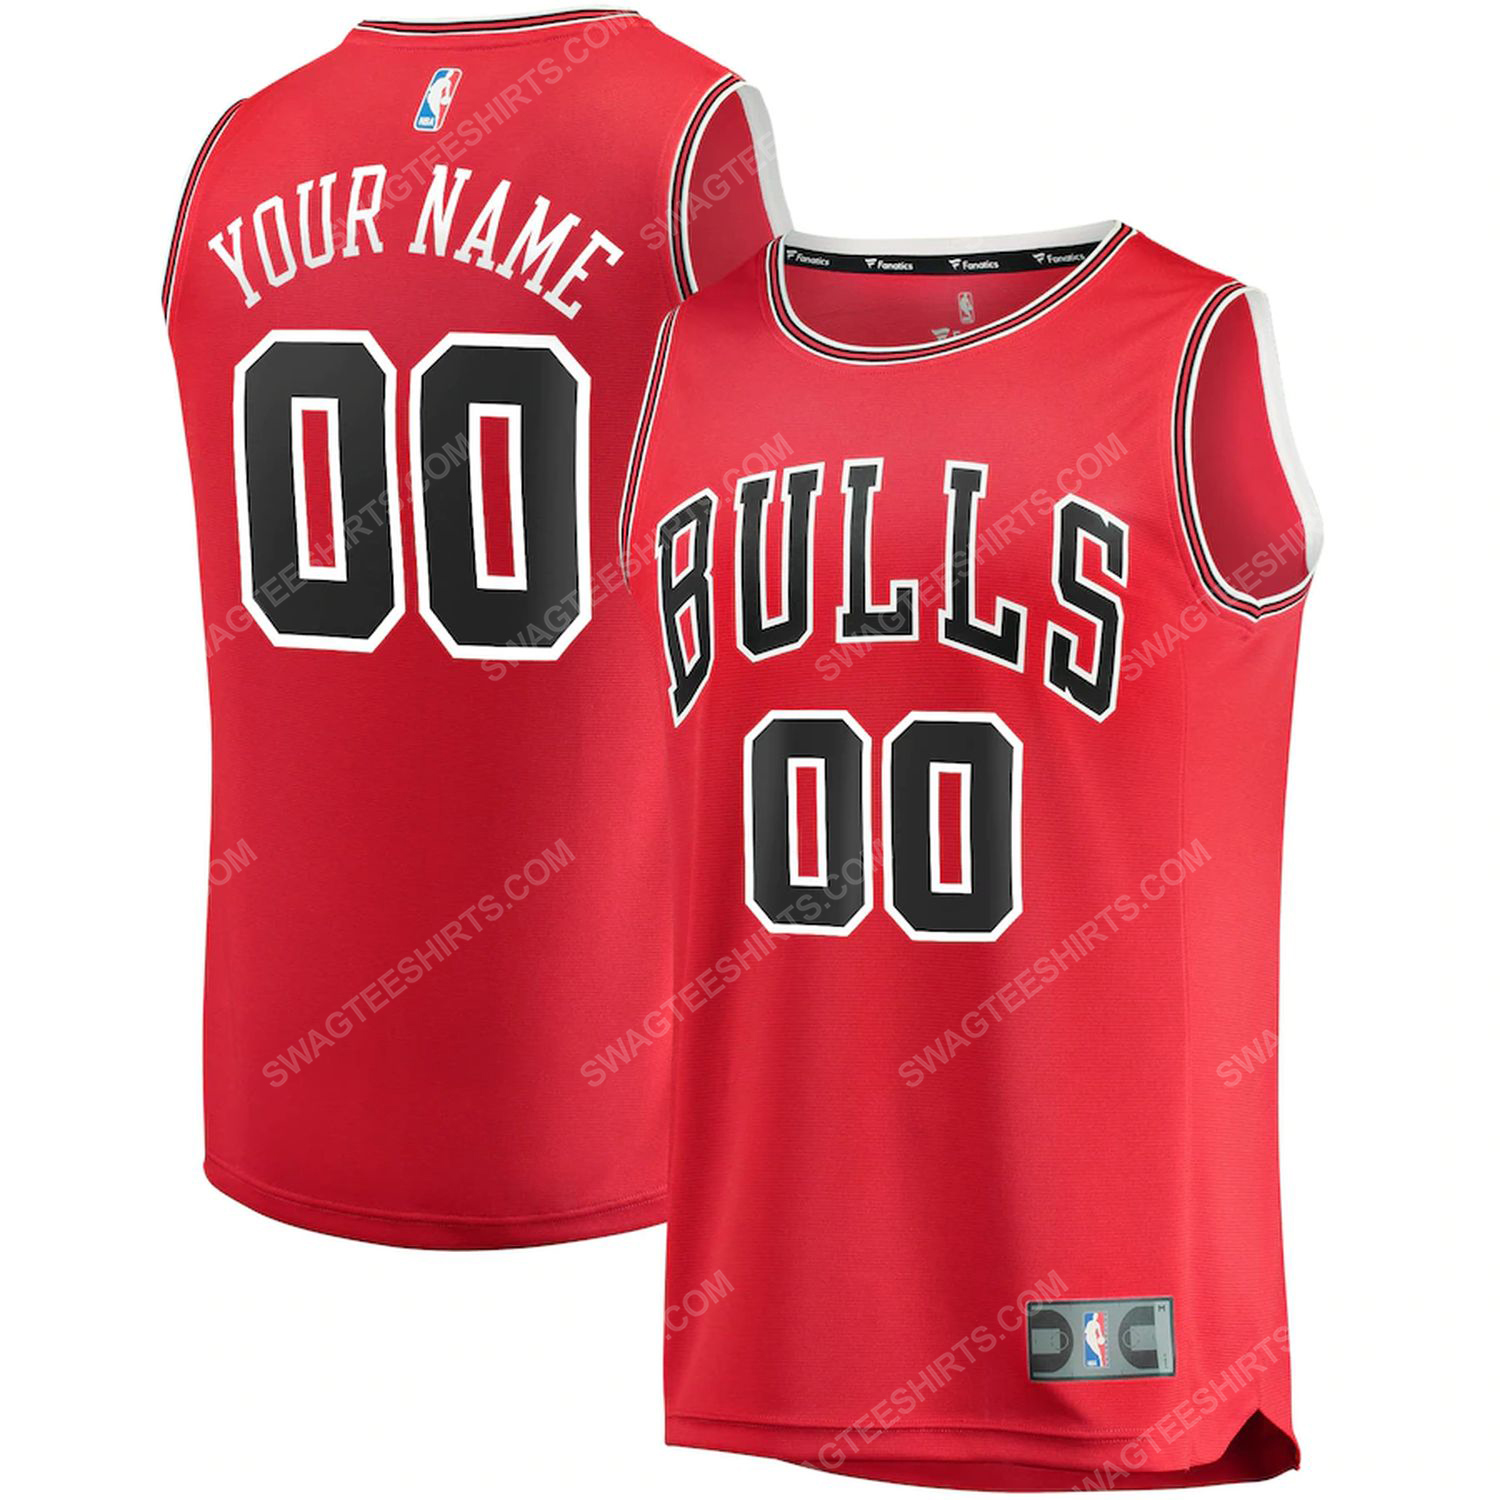 Custom nba chicago bulls team basketball jersey-red-icon edition